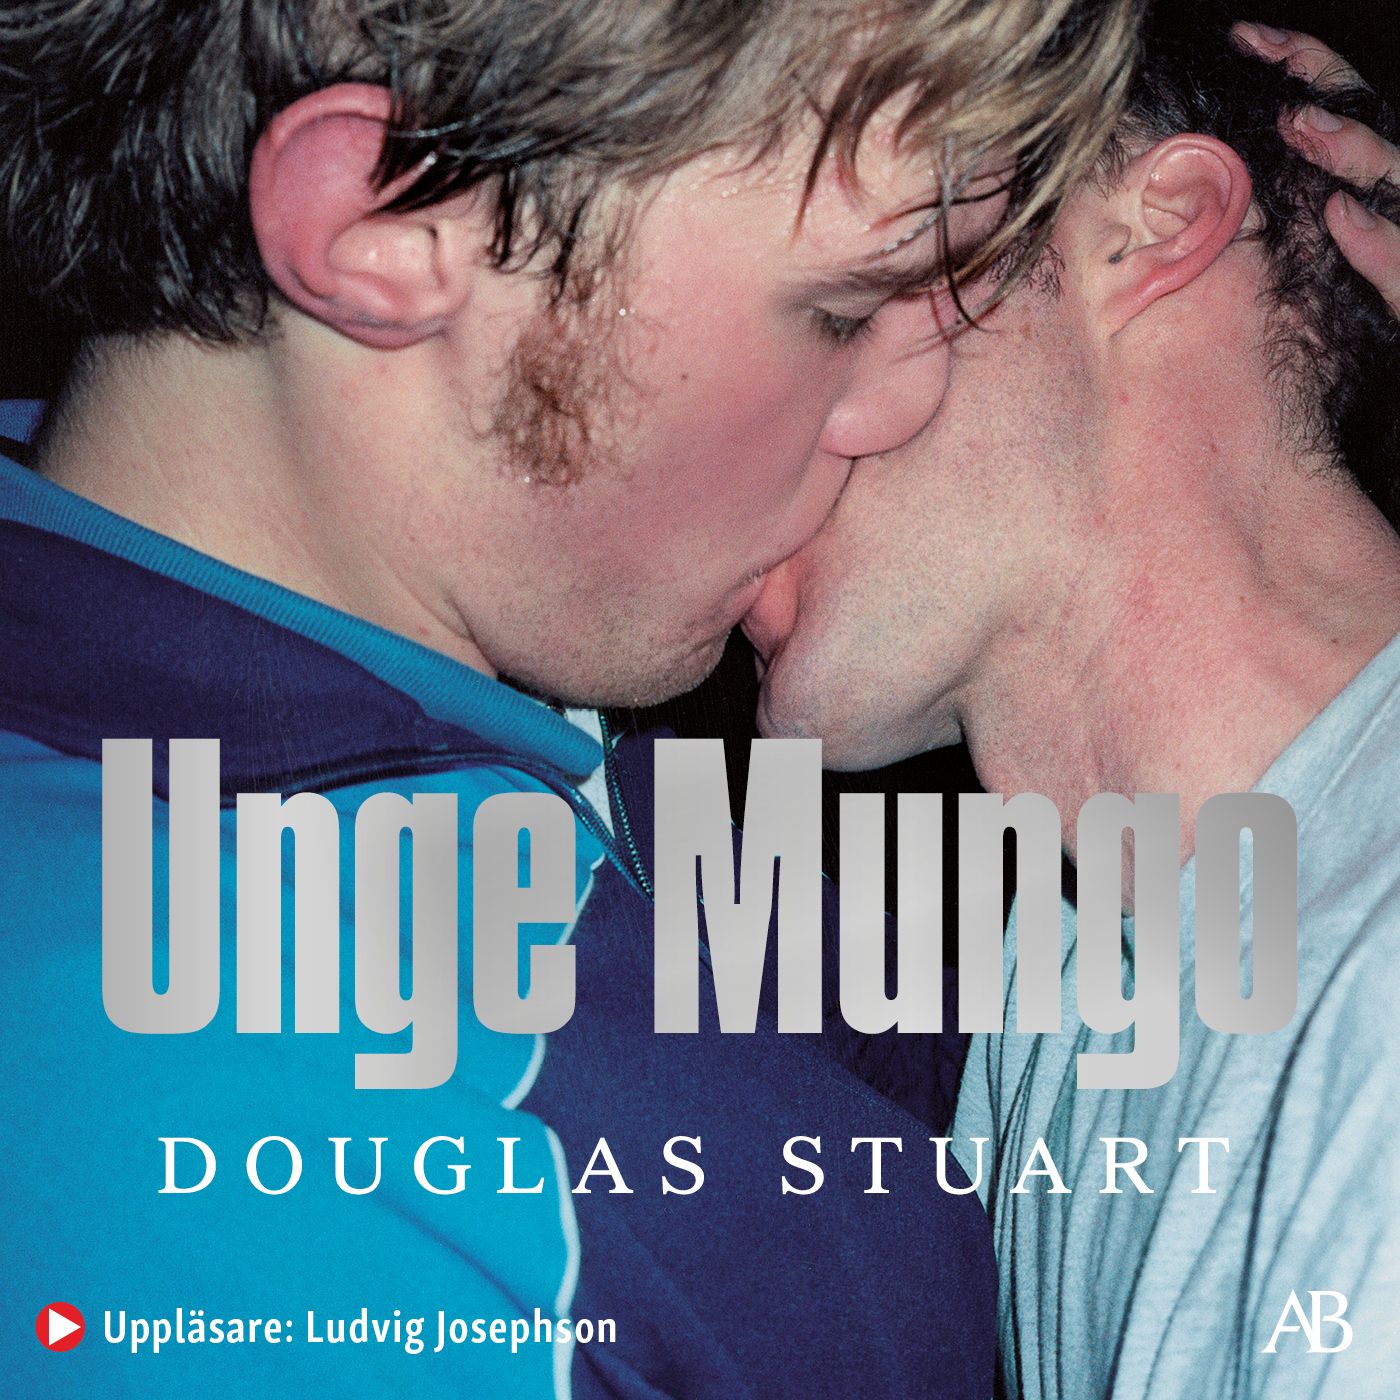 Unge Mungo, ljudbok av Douglas Stuart